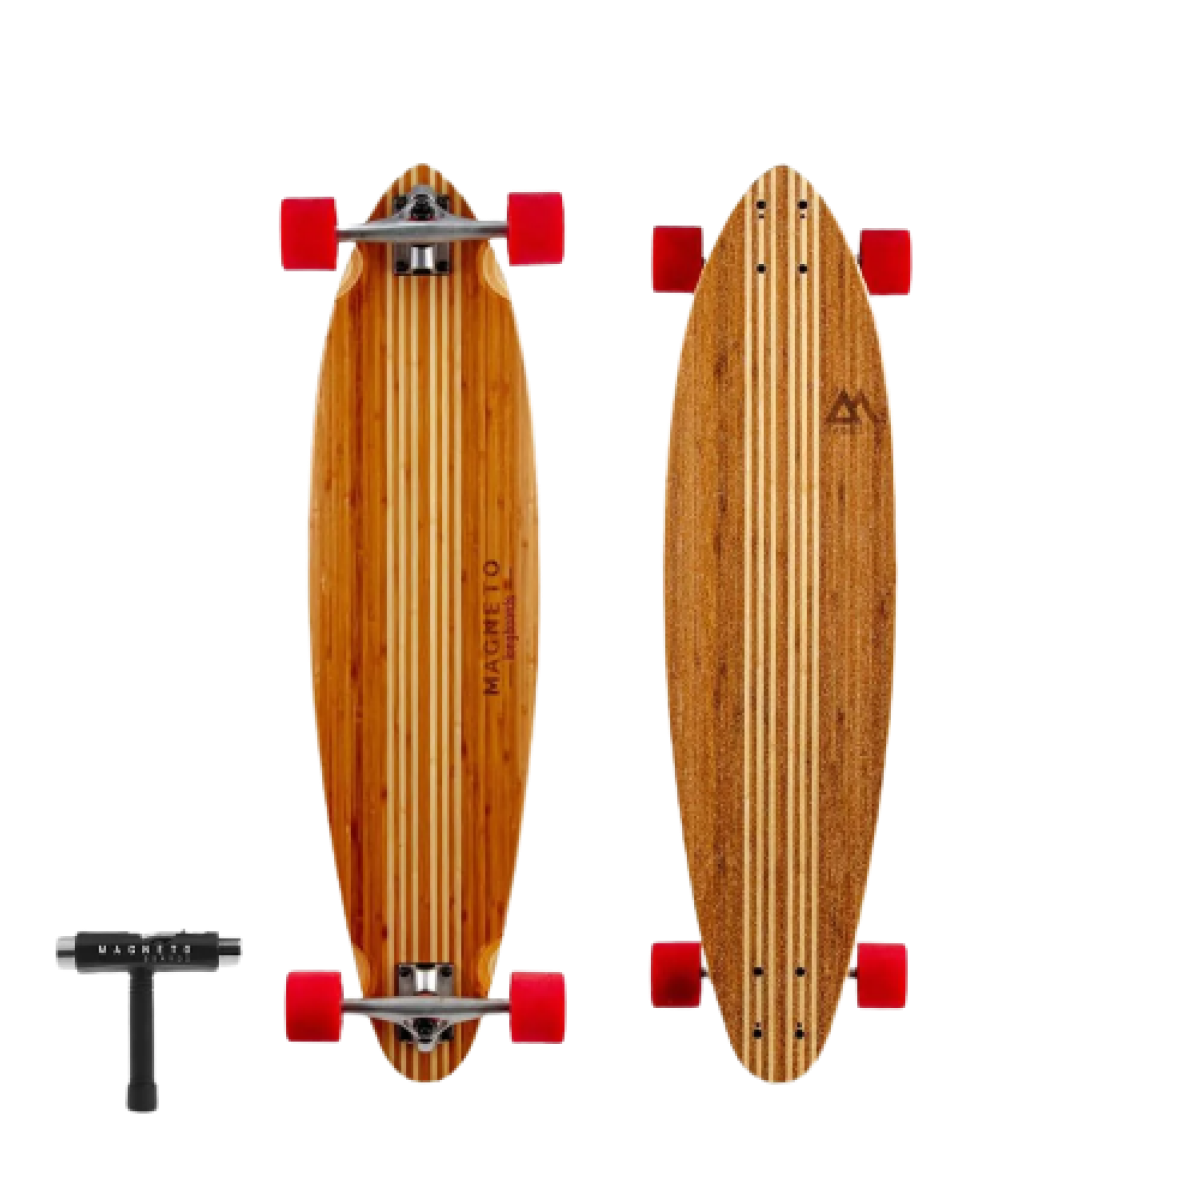 Professional Skatebord Lock Portable Board Lock Multi-function